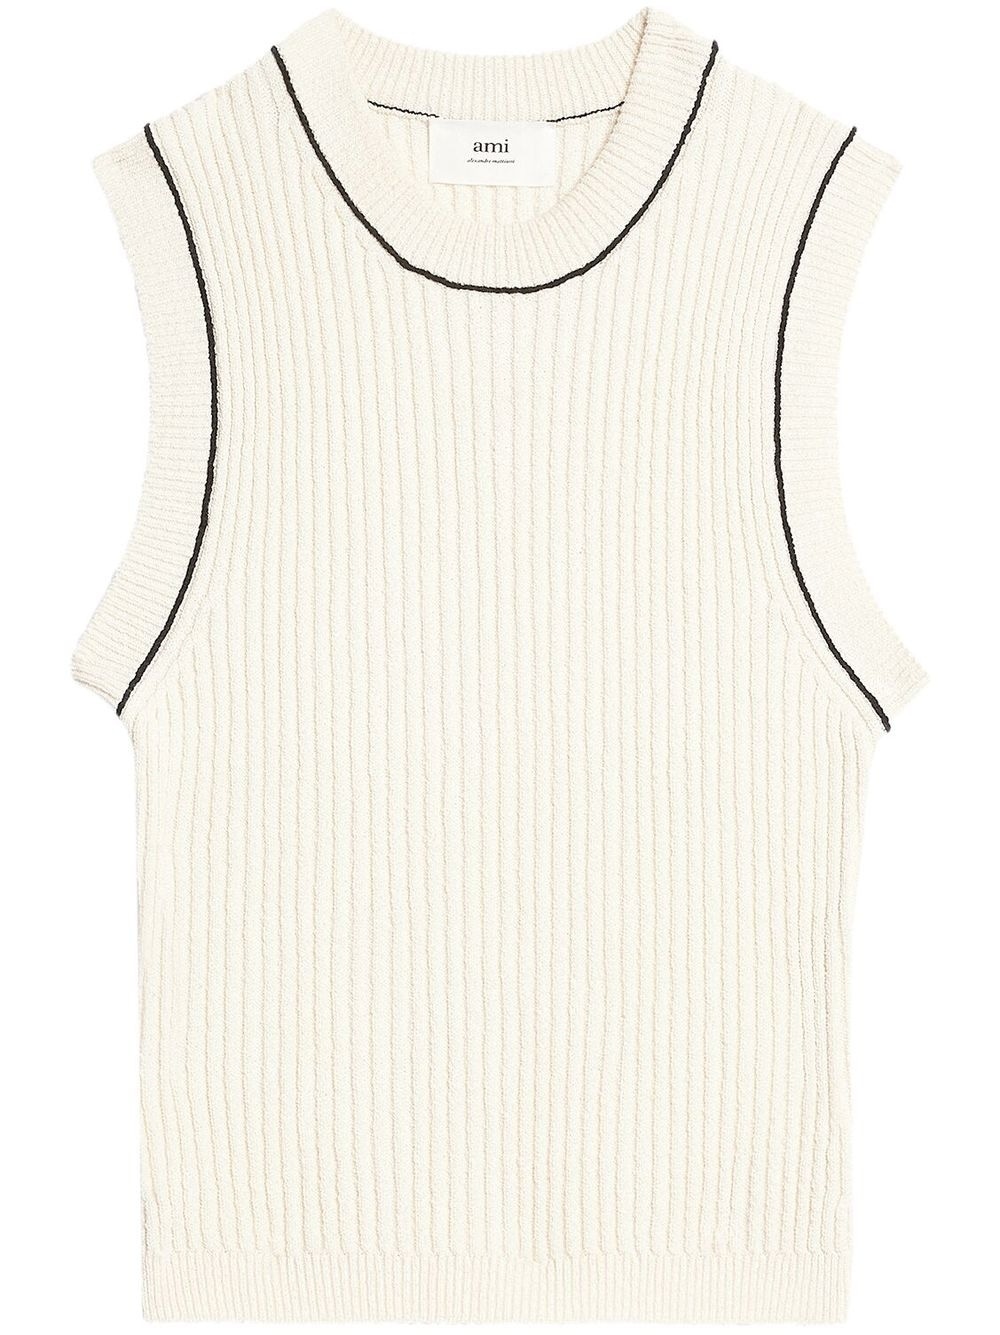 contrast-stitch sleeveless knit top - 1